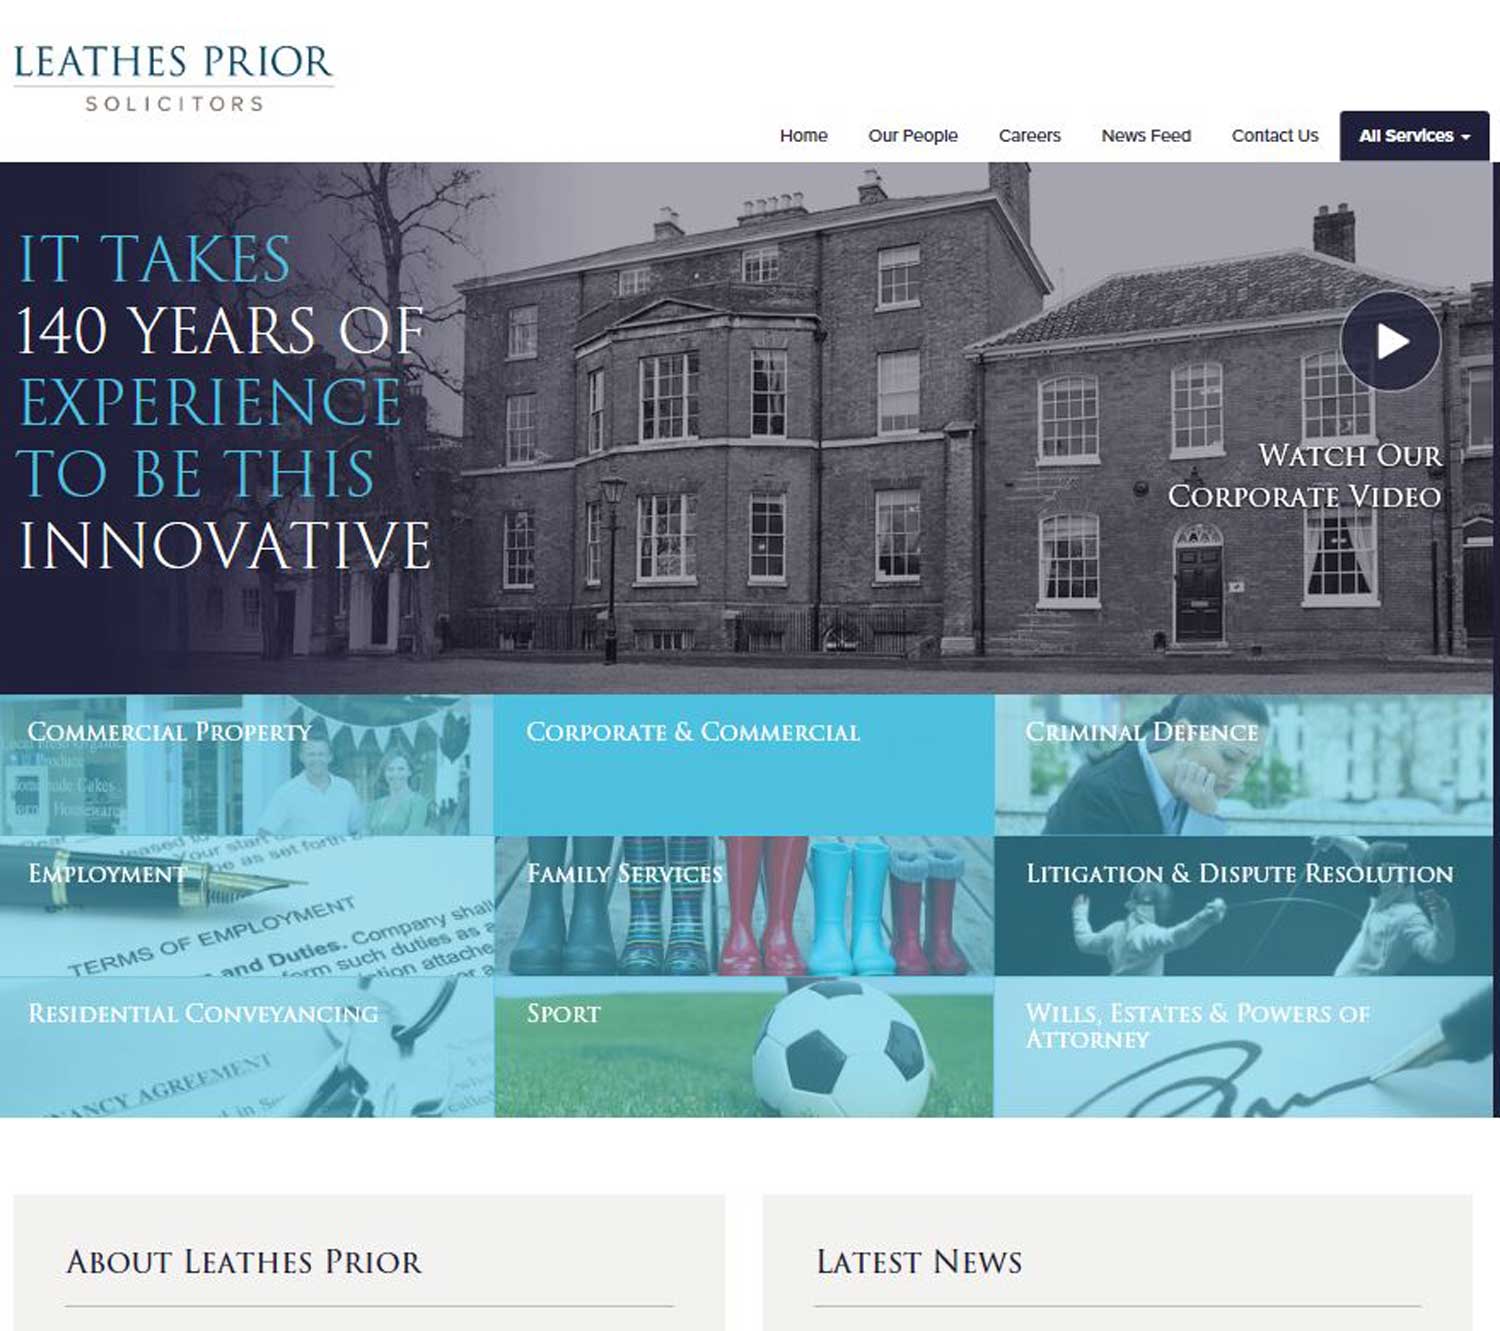 Website design for Leathes Prior solicitors